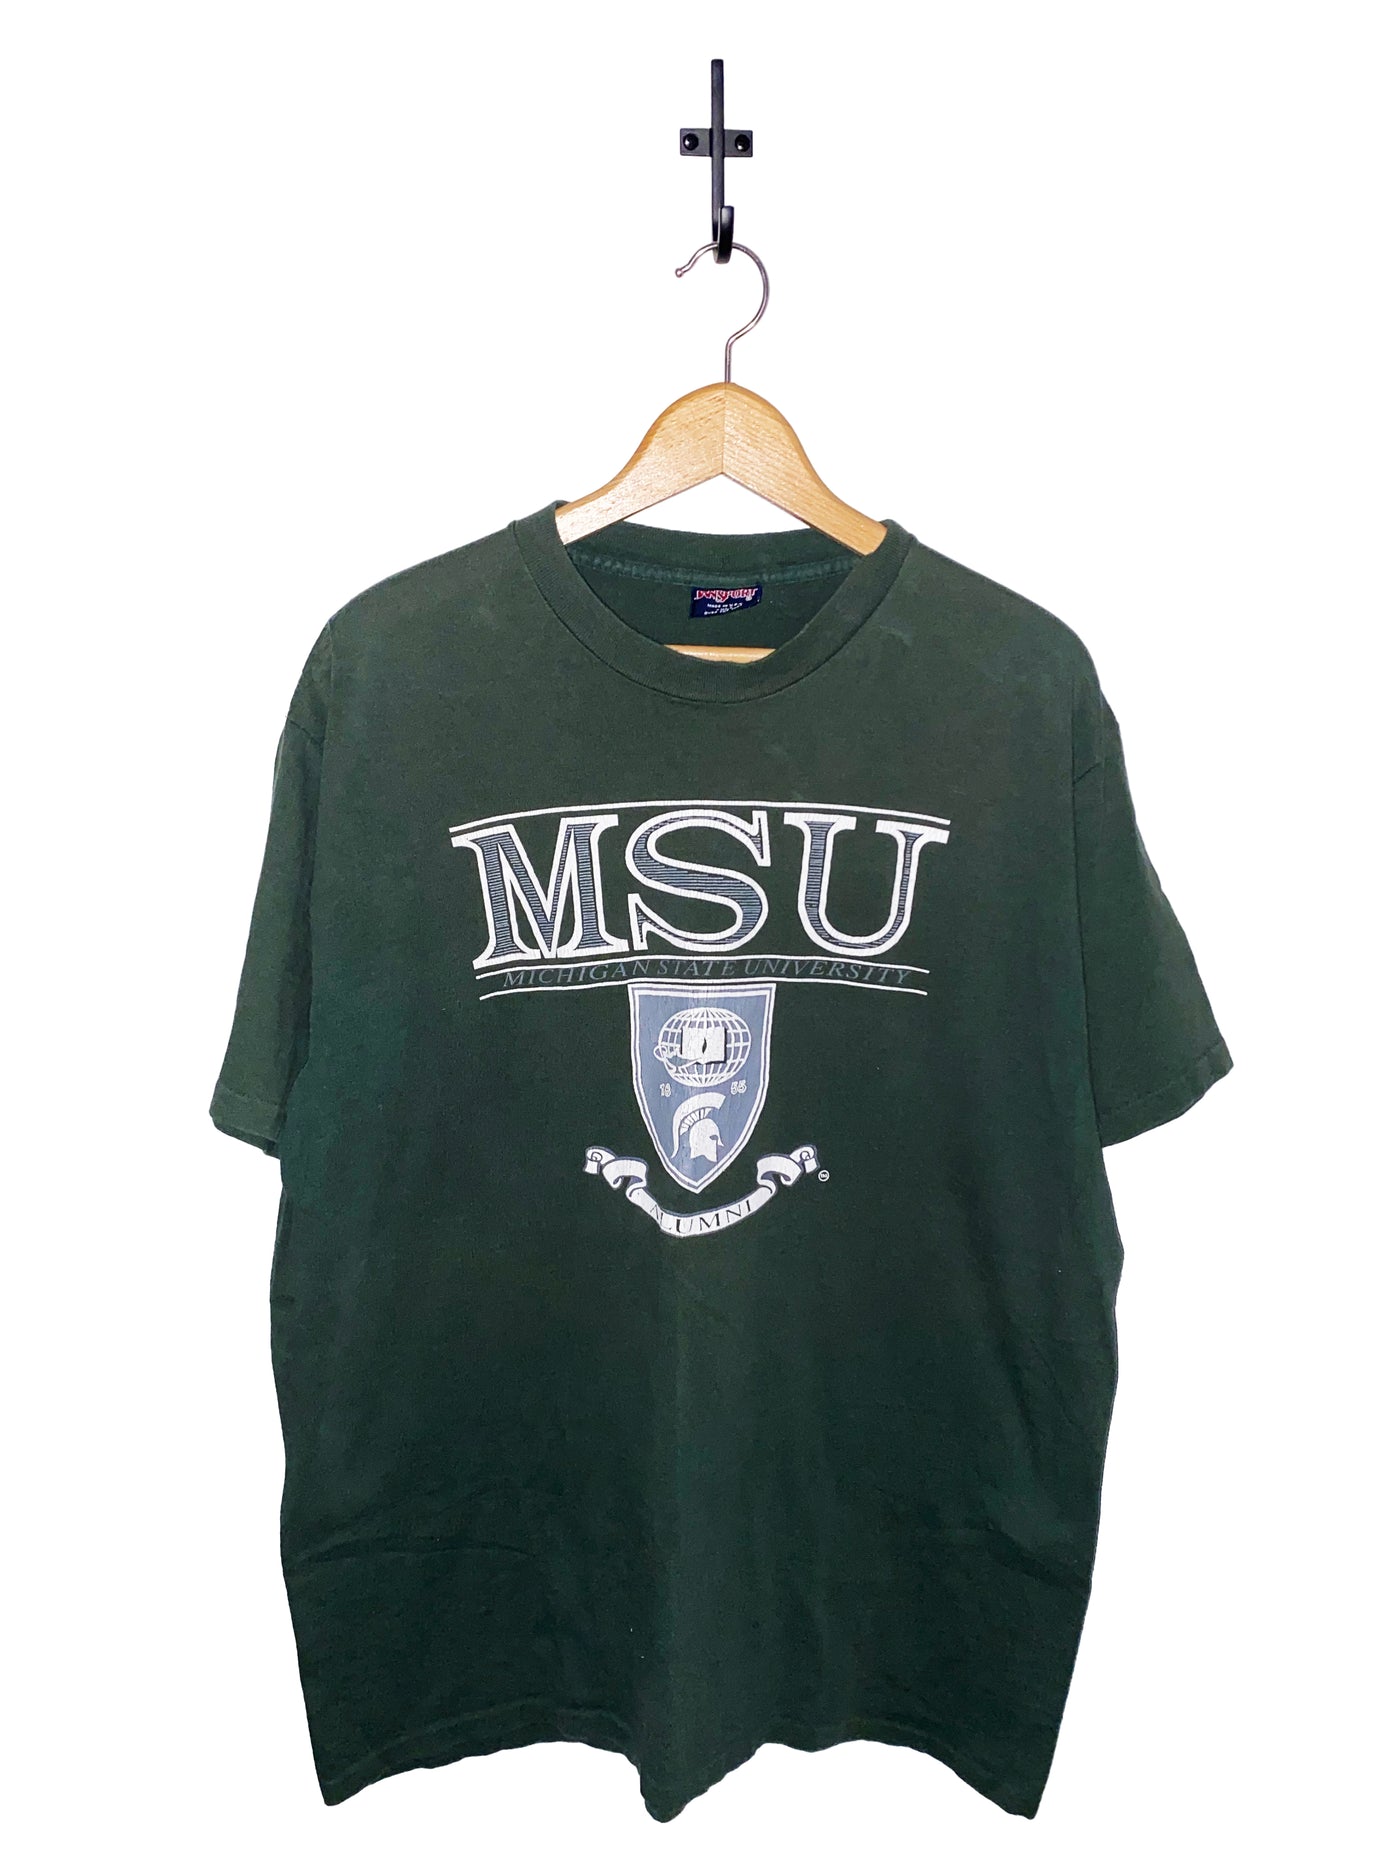 Vintage 80s MSU T-Shirt